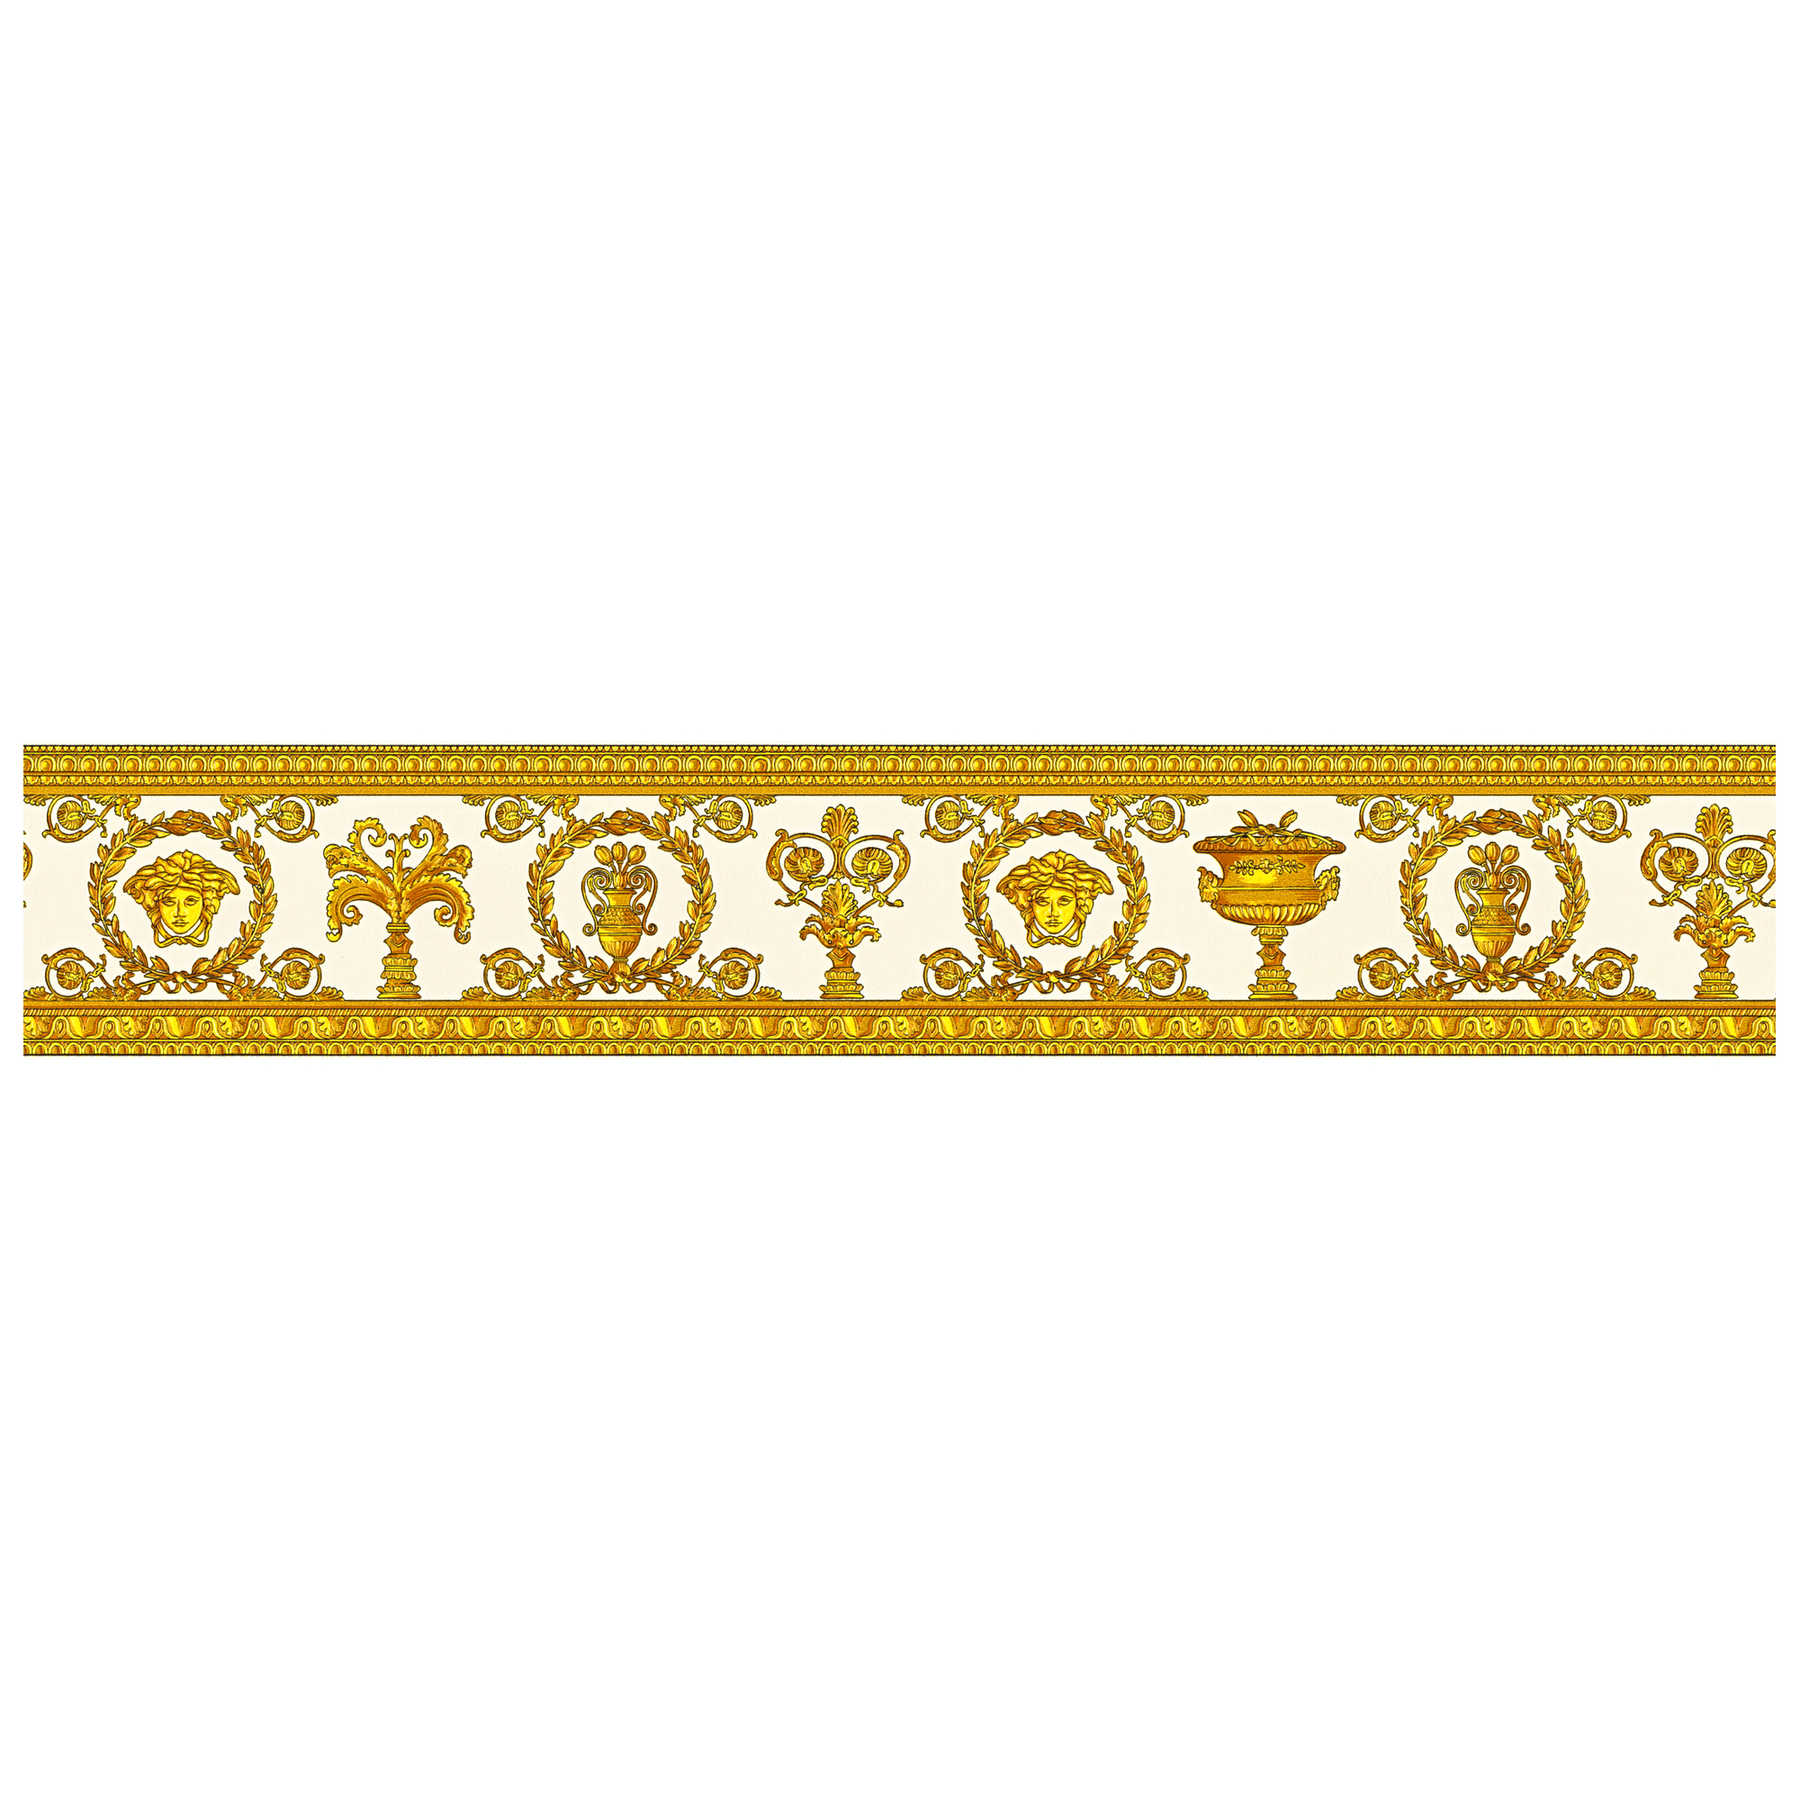 VERSACE wallpaper border golden ornamental border - metallic
